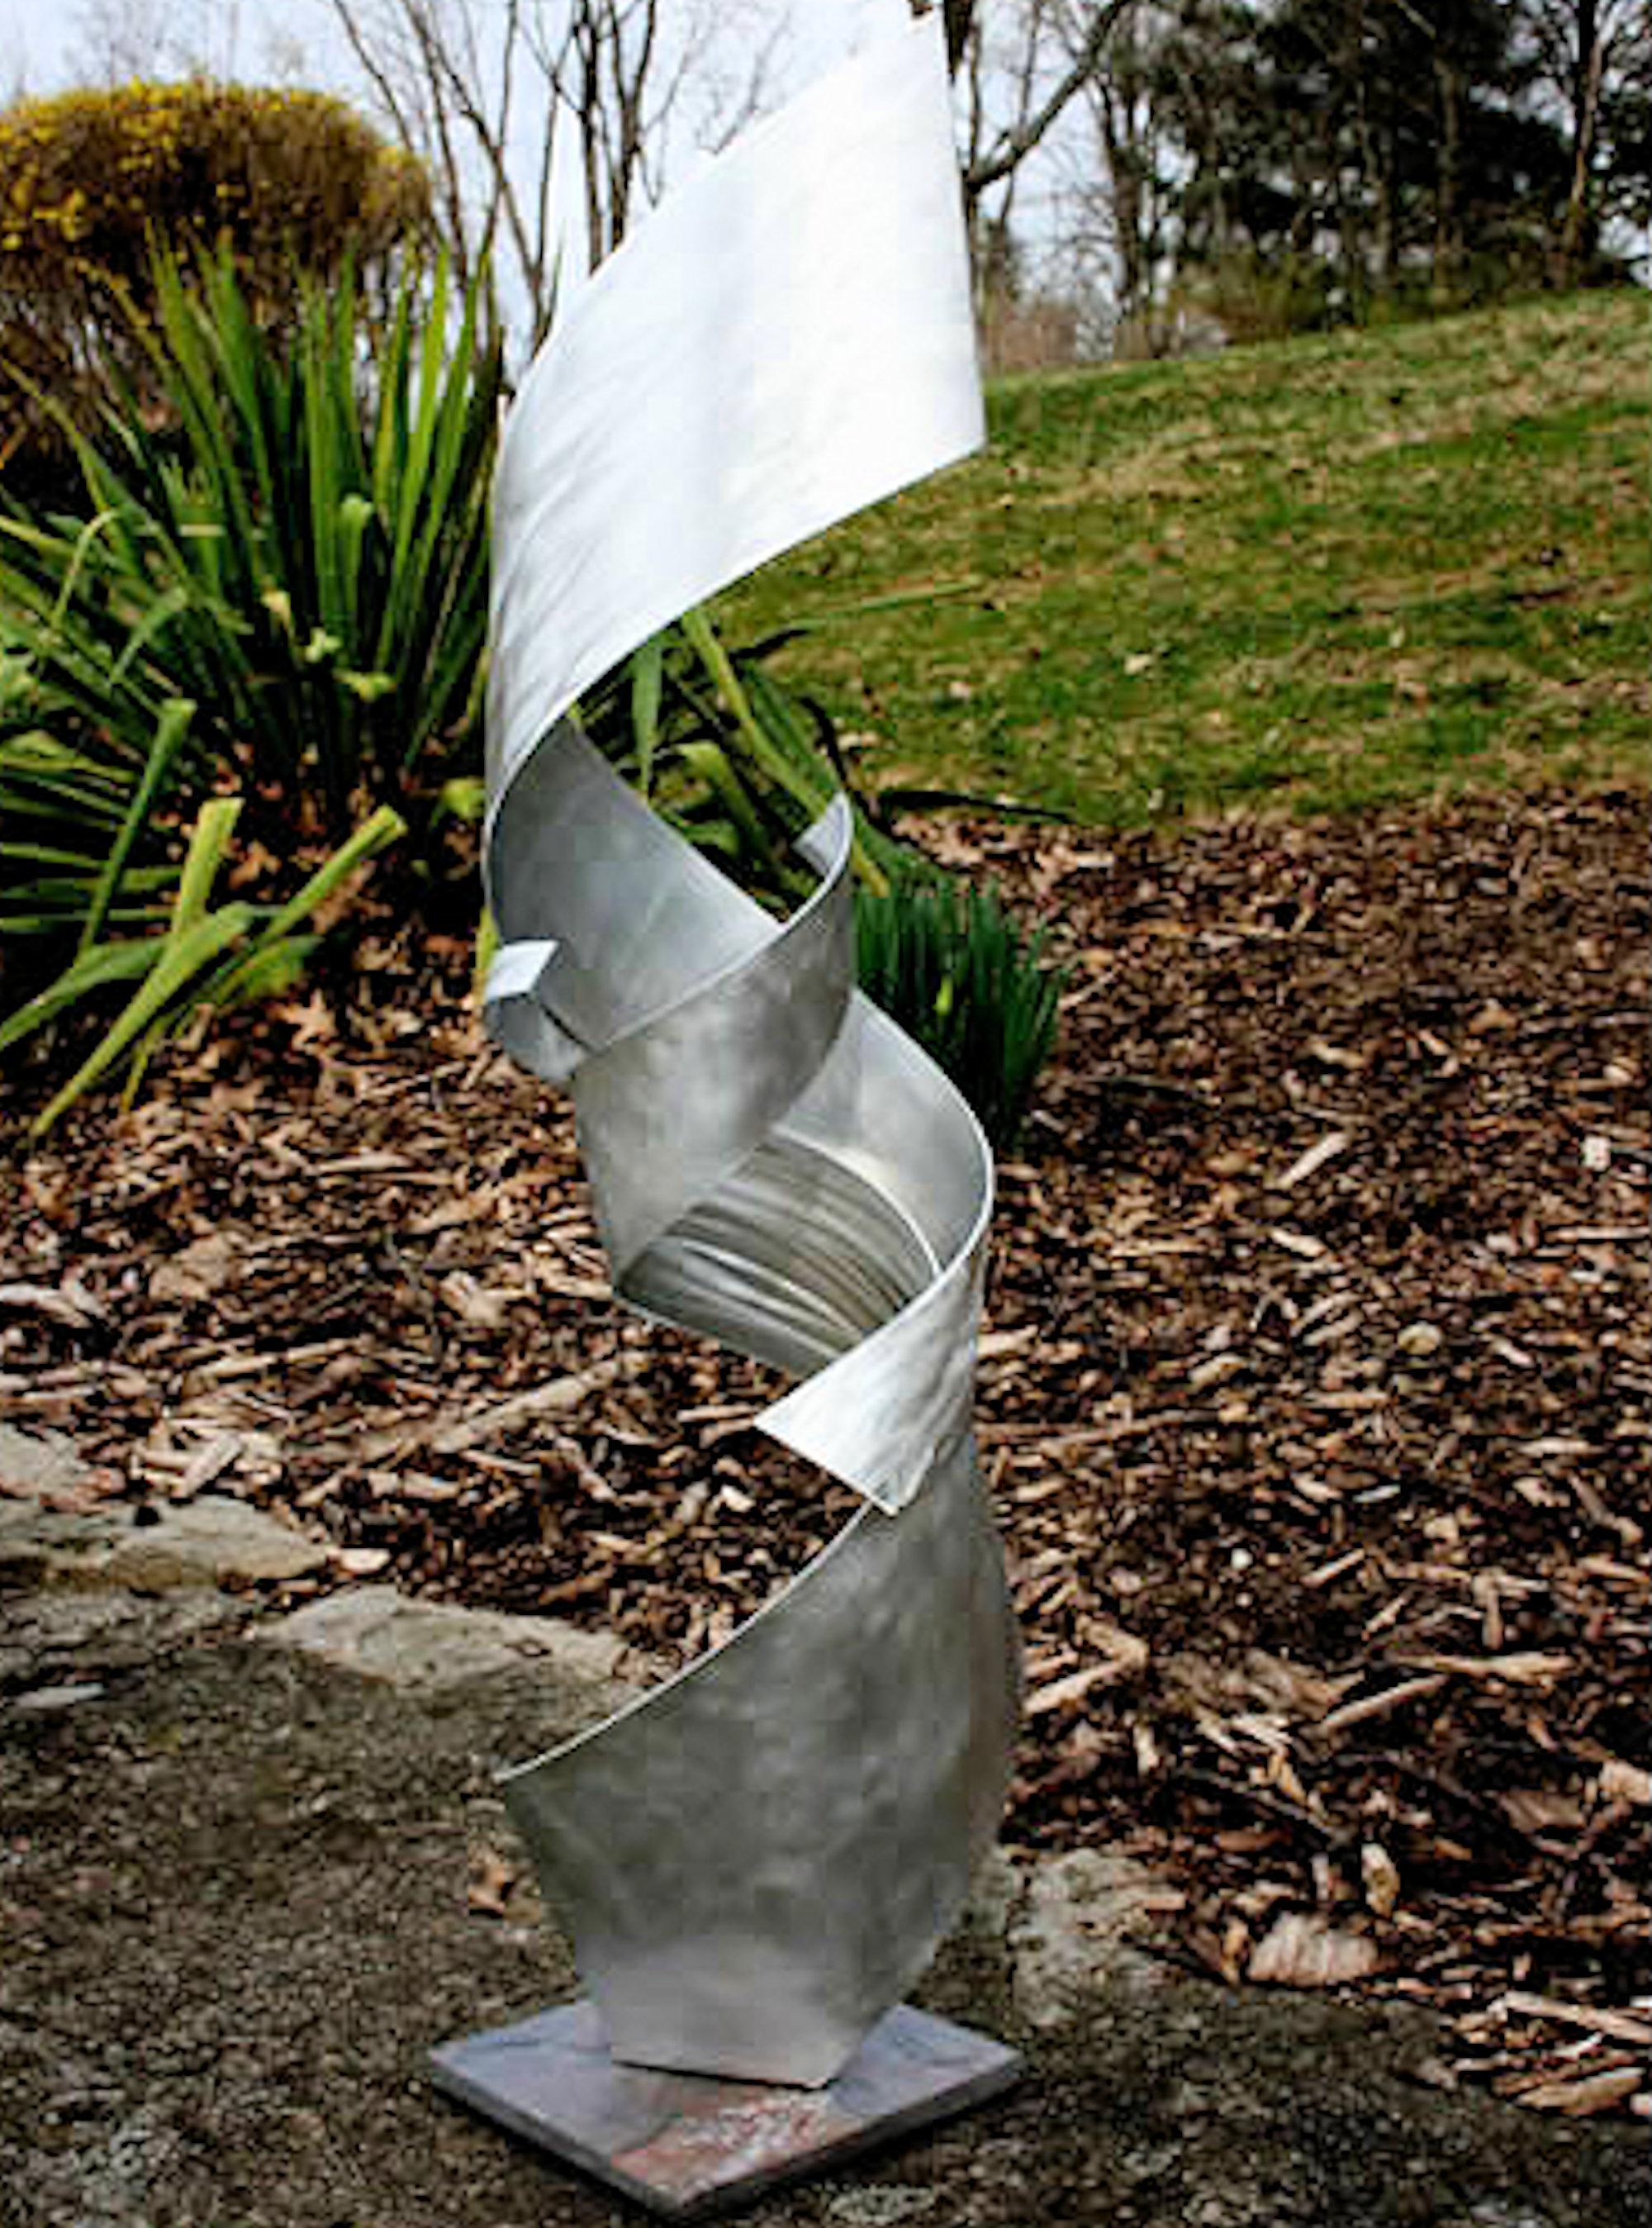 Stainless Steel Indoor Outdoor Sculpture Modern Contemporary Art, by Sebastian R